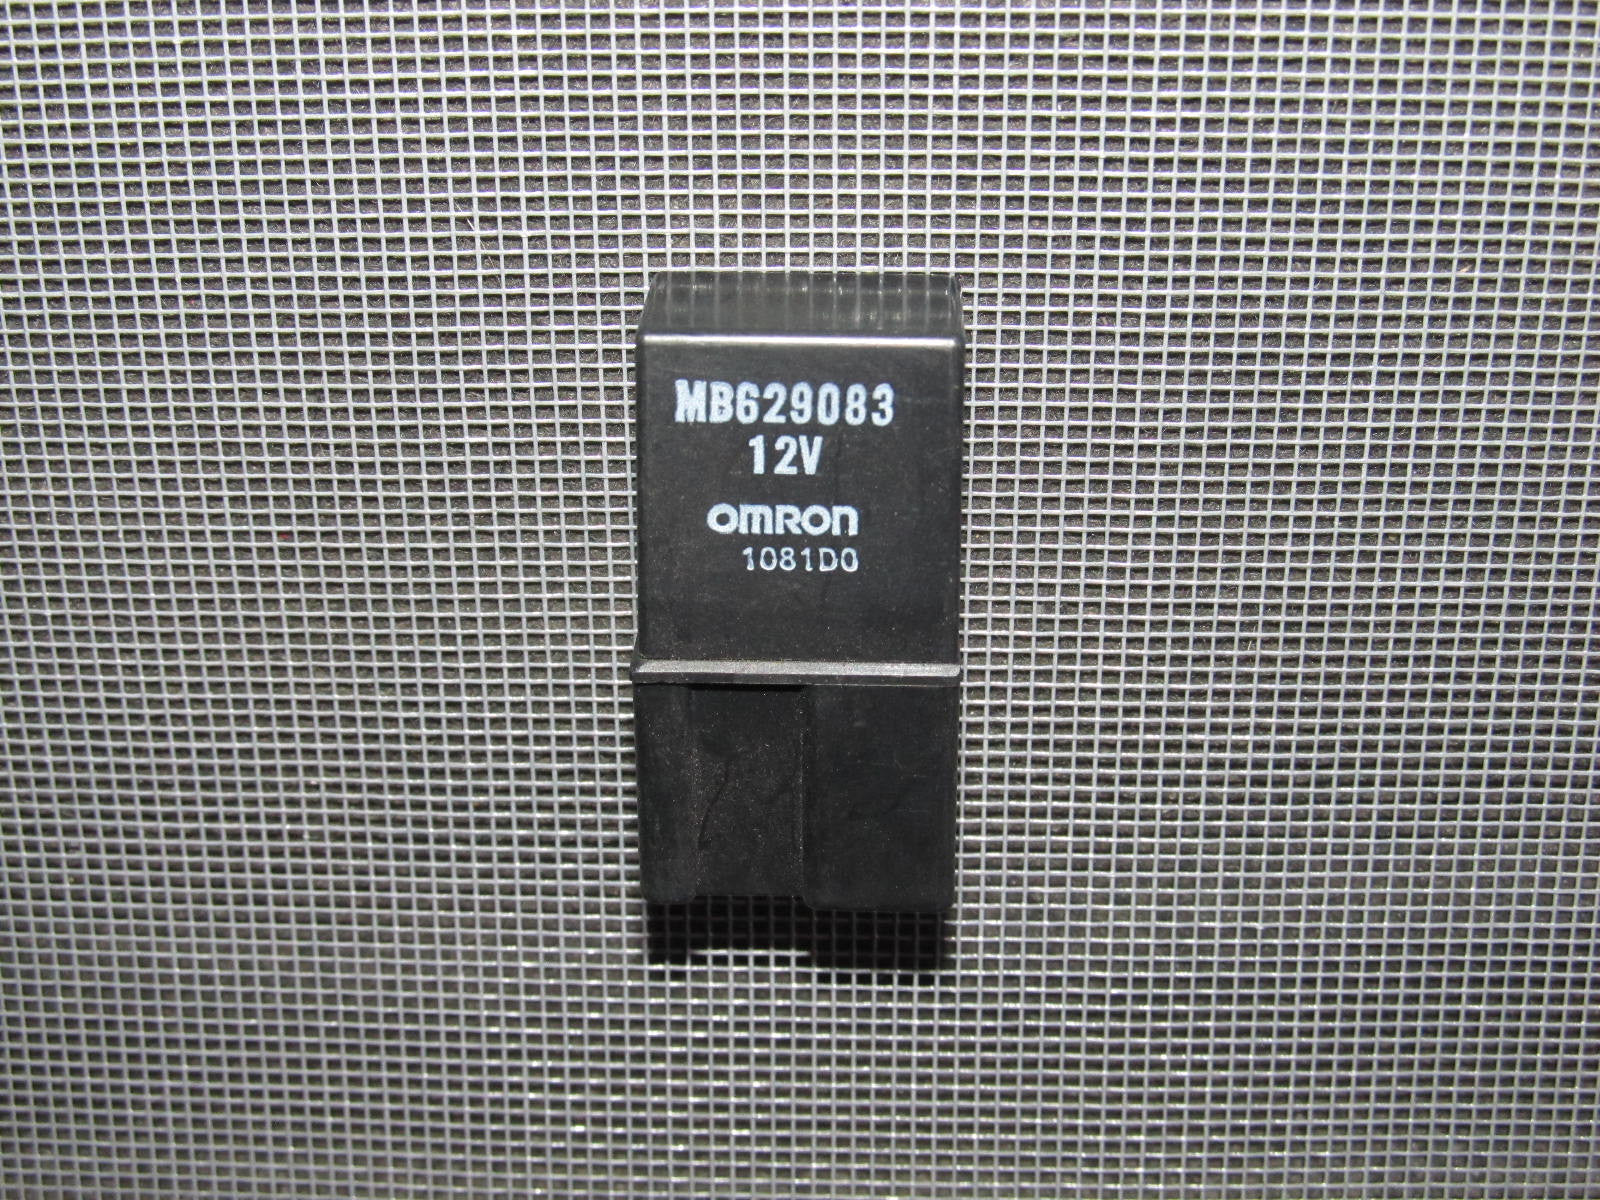 Mitsubishi Universal Relay MB629083